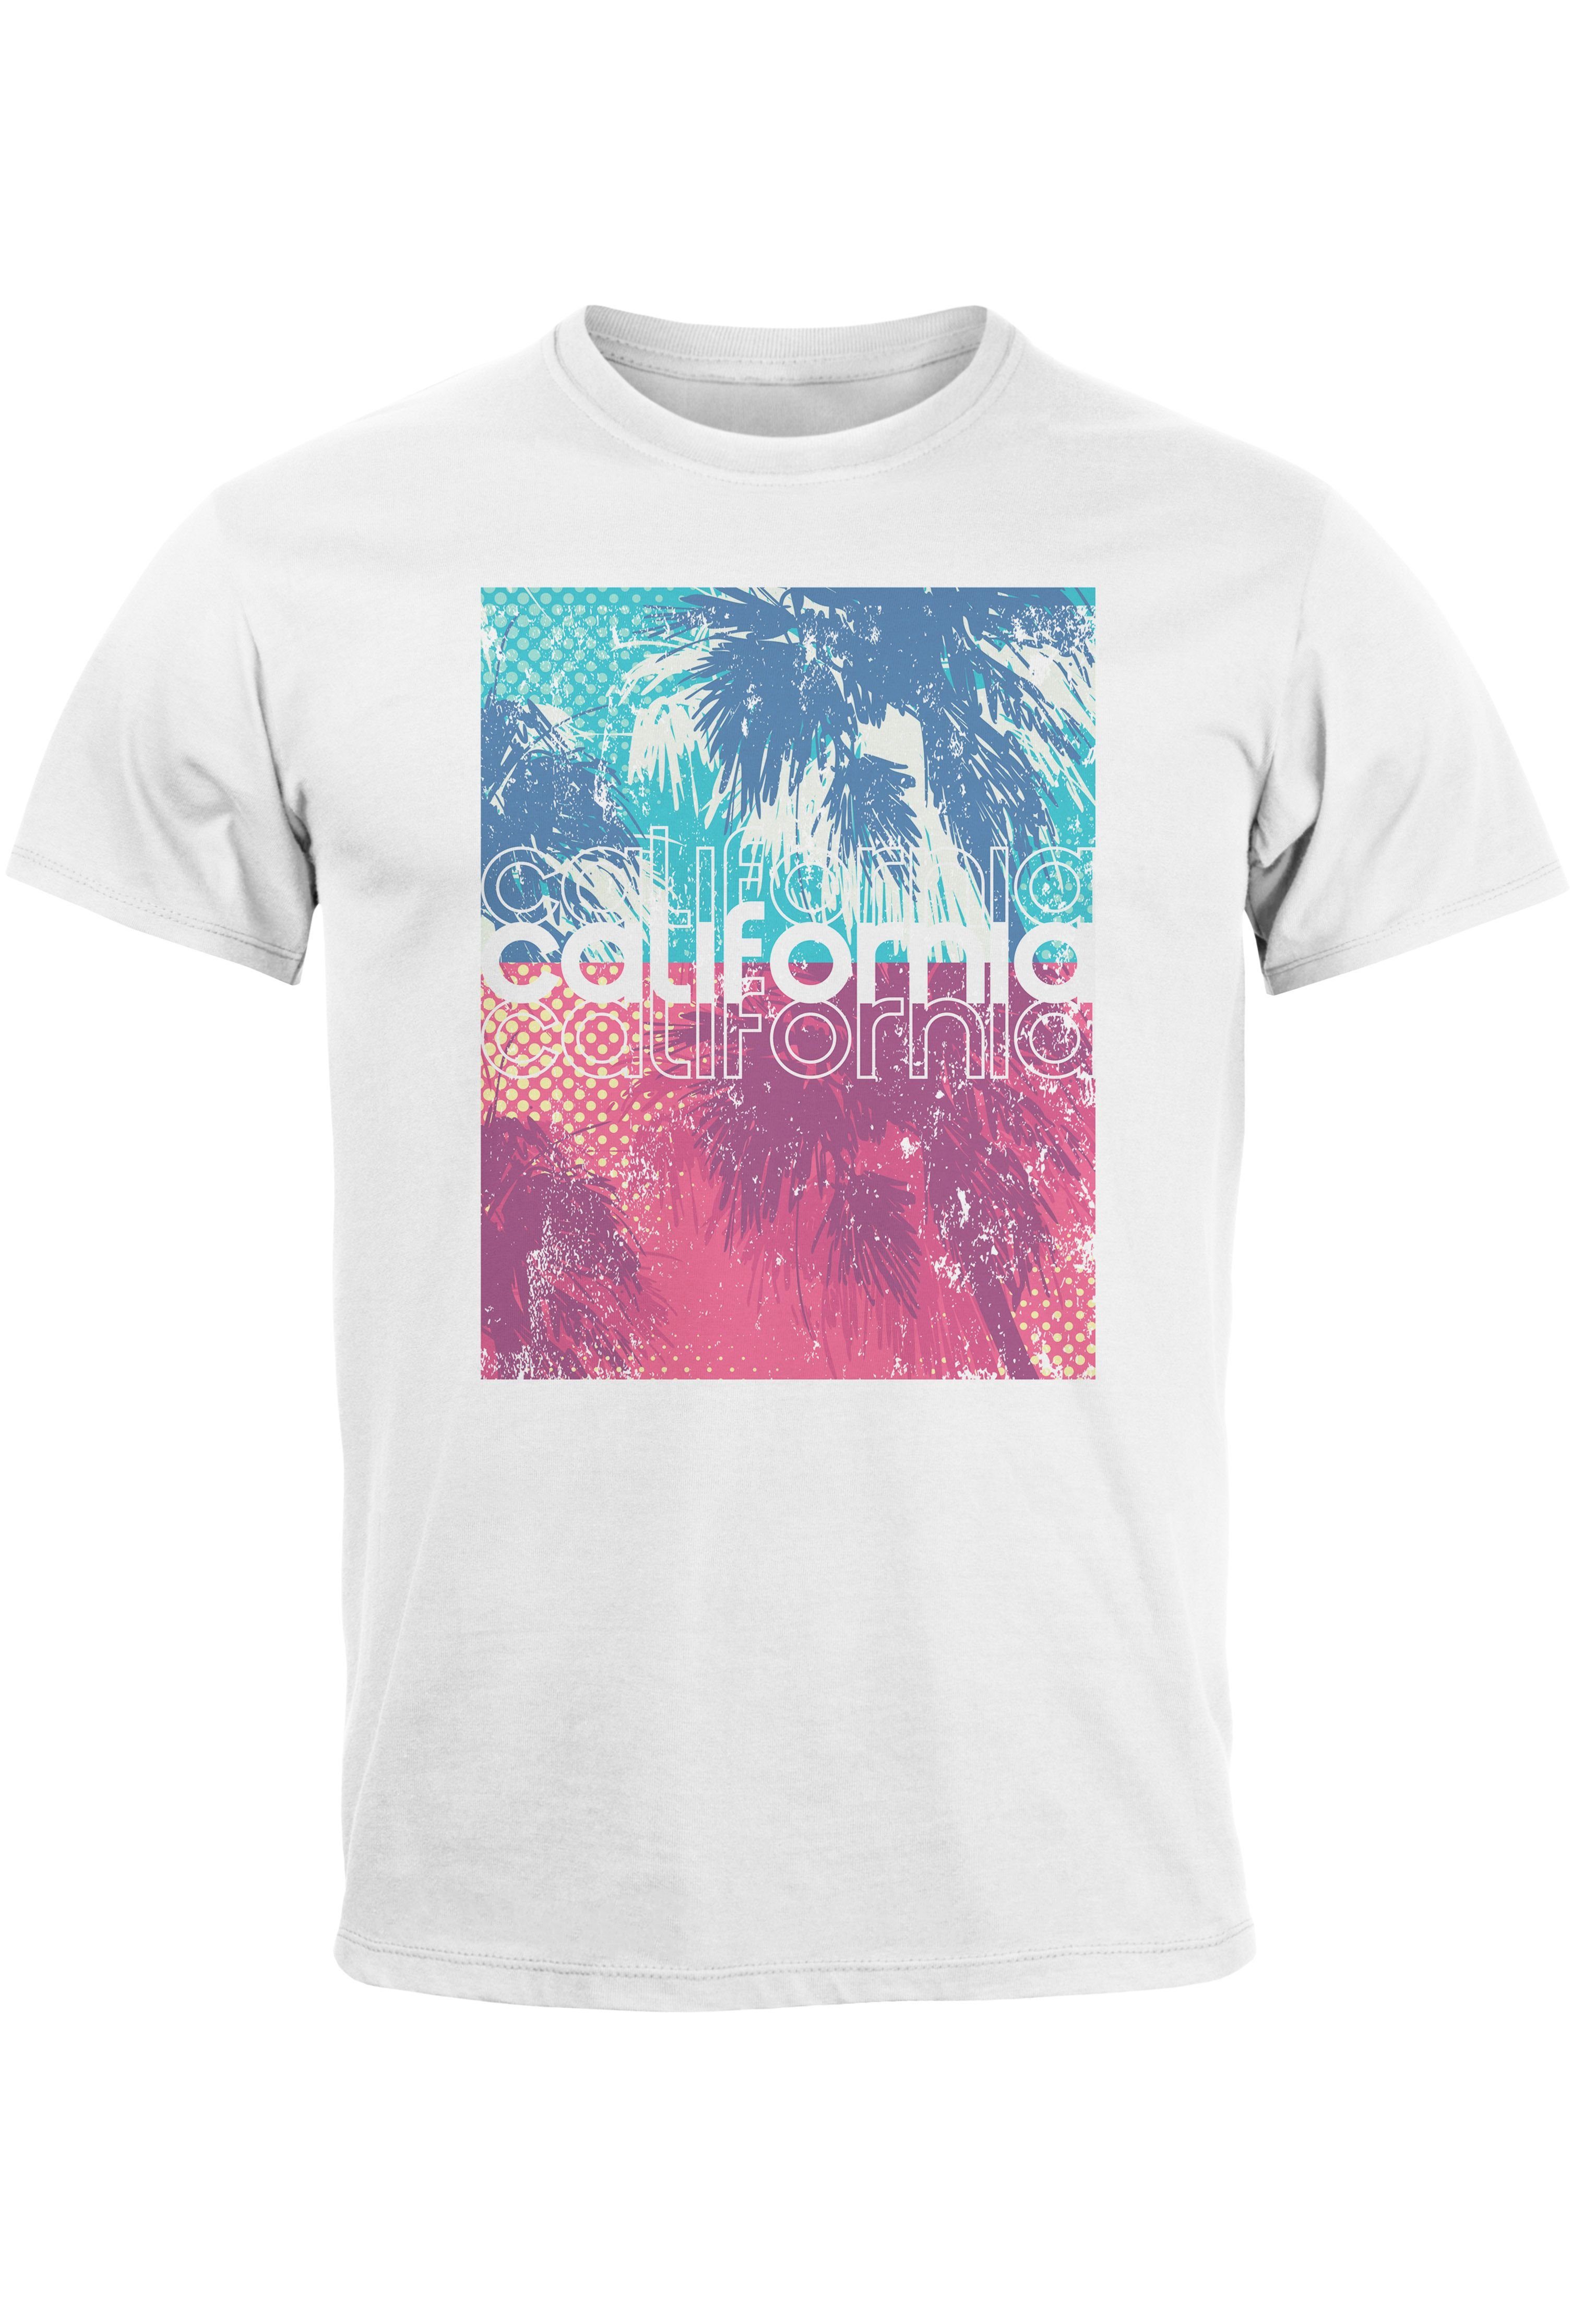 Neverless Print-Shirt Herren T-Shirt Top California Palmen Sommer Foto Print Aufdruck Abstra mit Print weiß